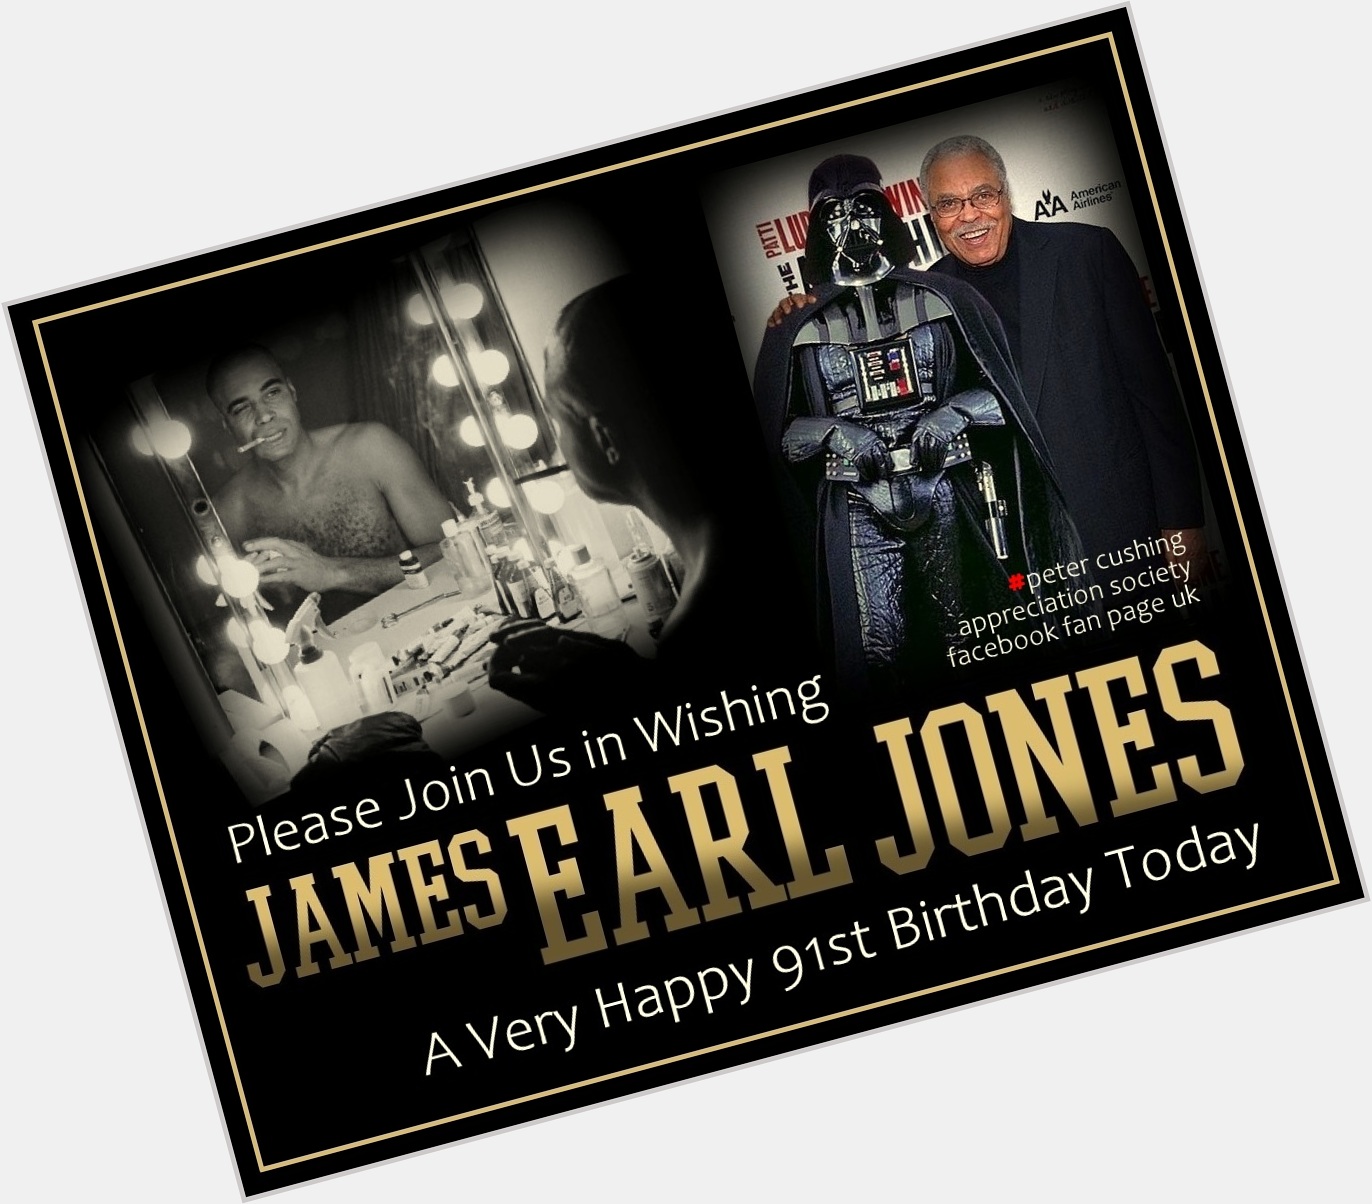  (PCASUK): HAPPY 91st BIRTHDAY JAMESEARLJONES!  